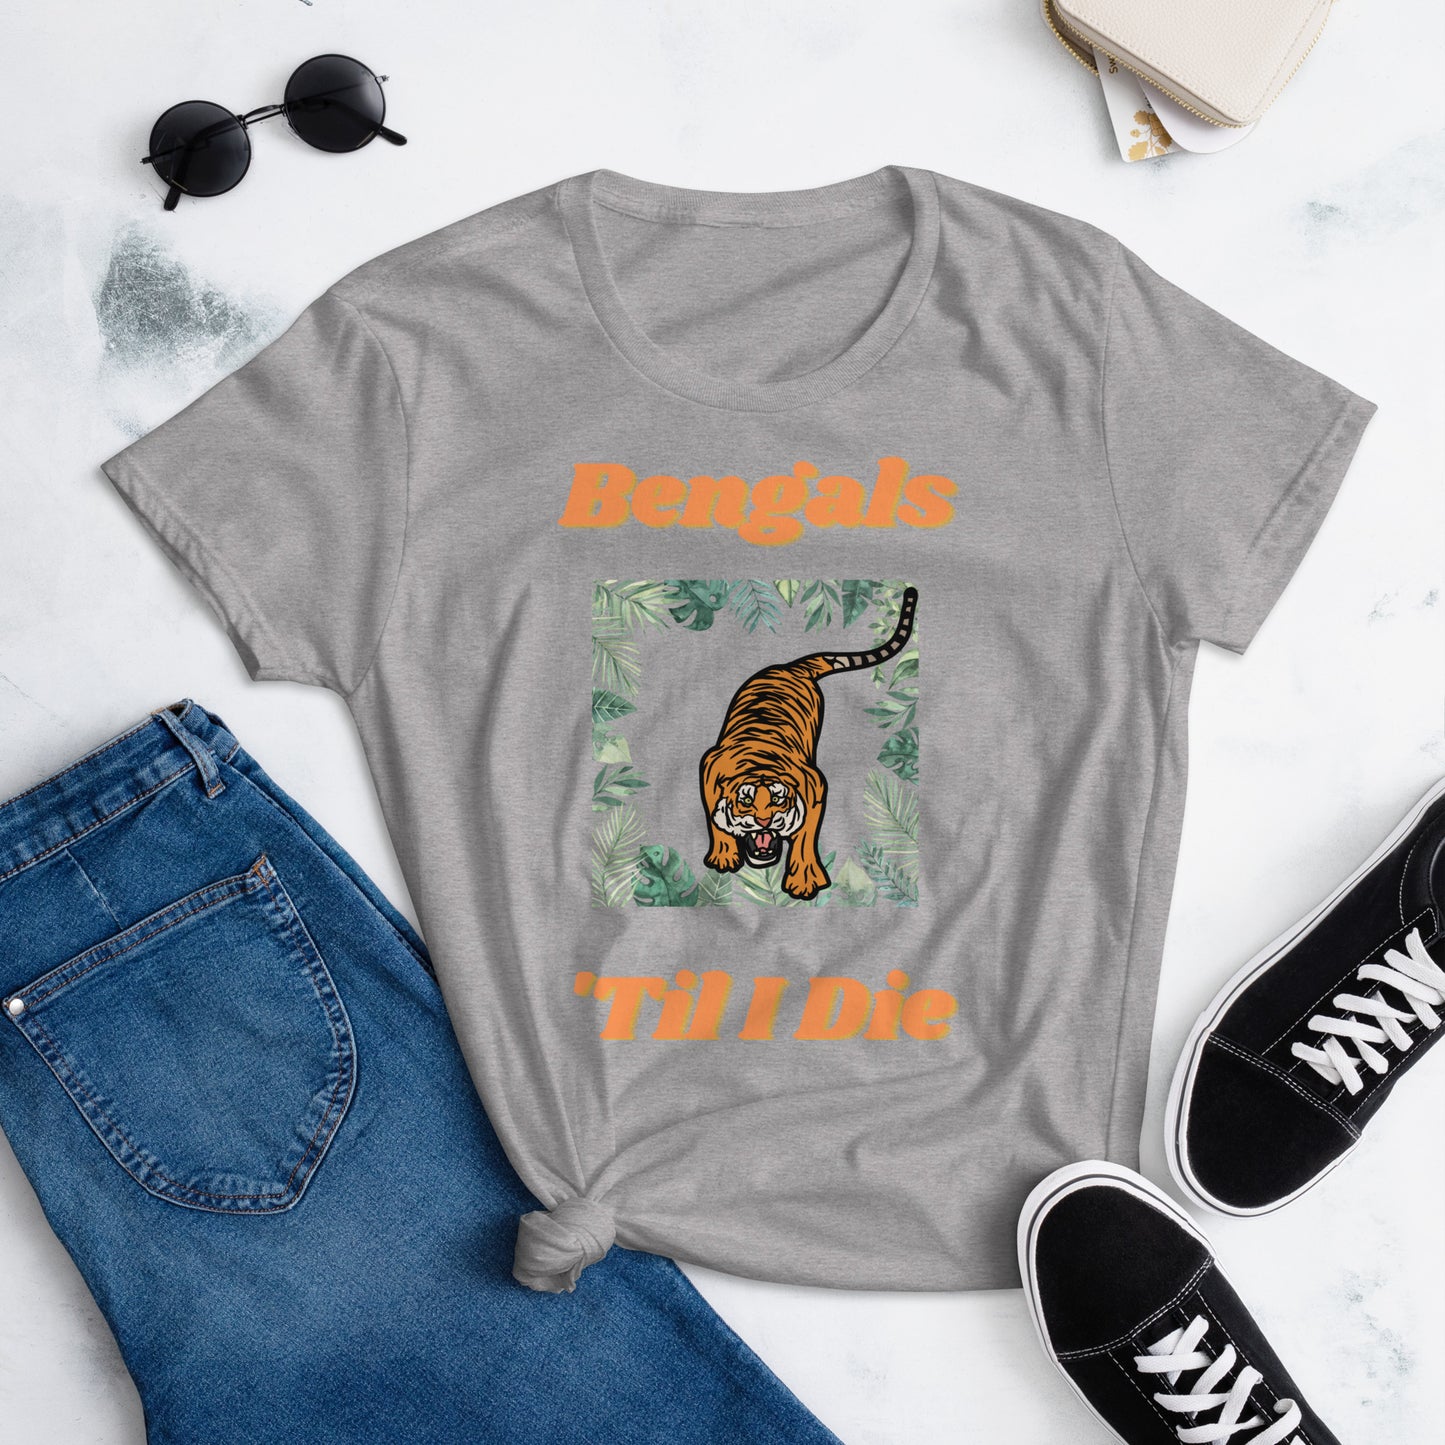 Bengals 'Til I Die Women's Short Sleeve T-Shirt